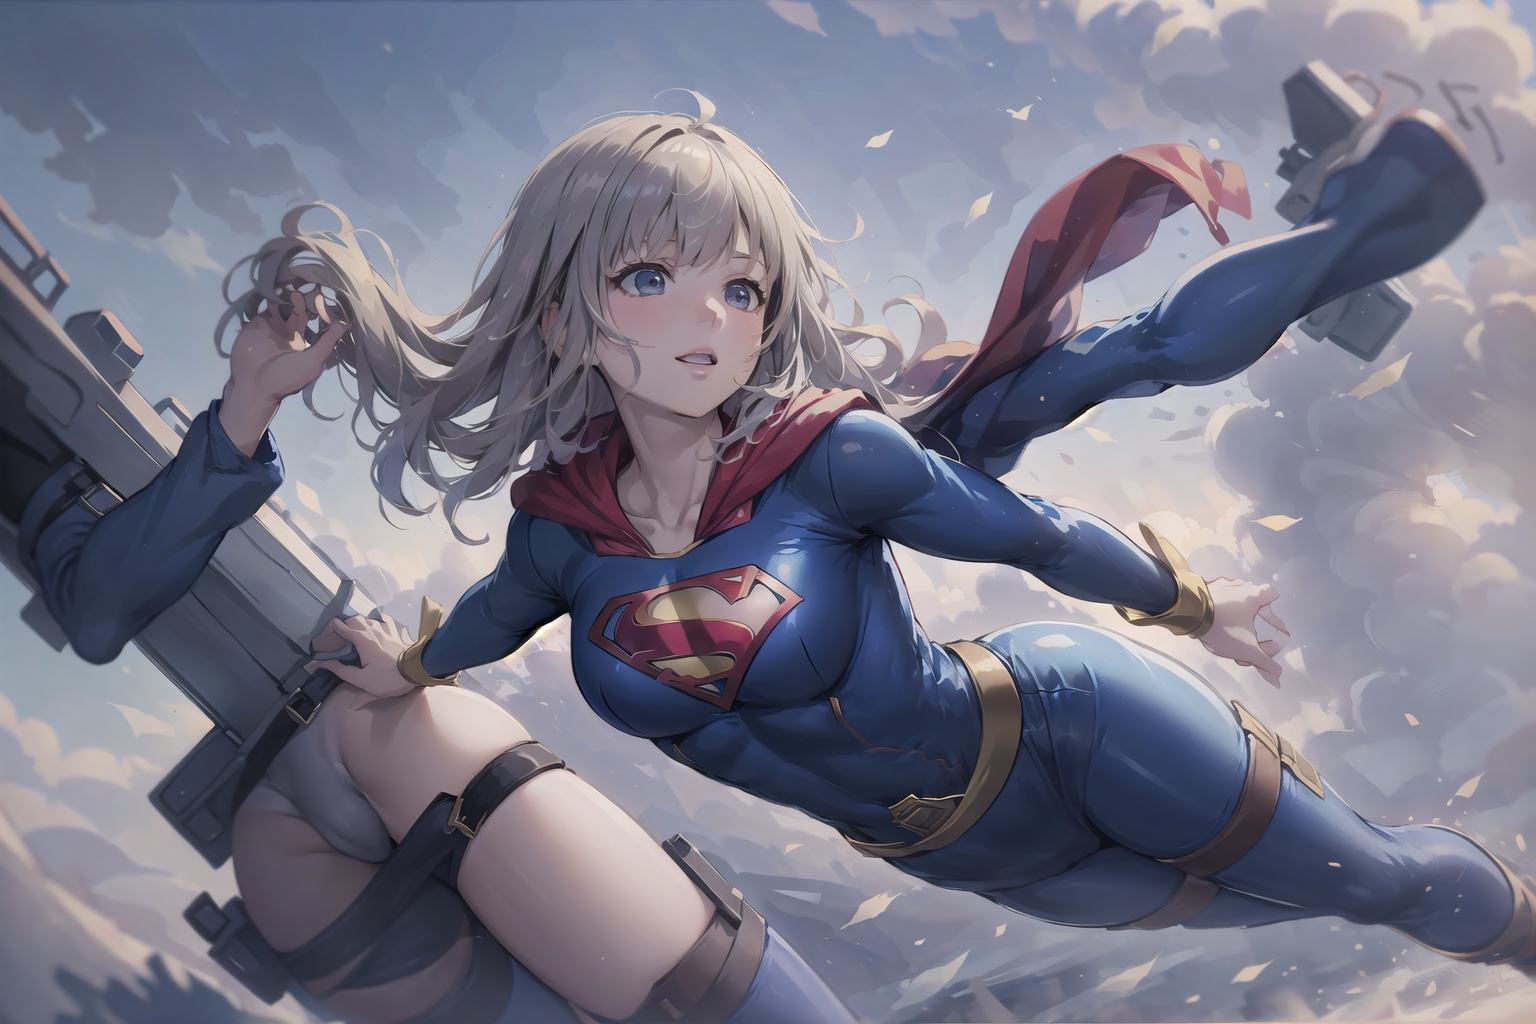 Comic Frontline: DC Super Hero Girls Debuts New Animated Short 